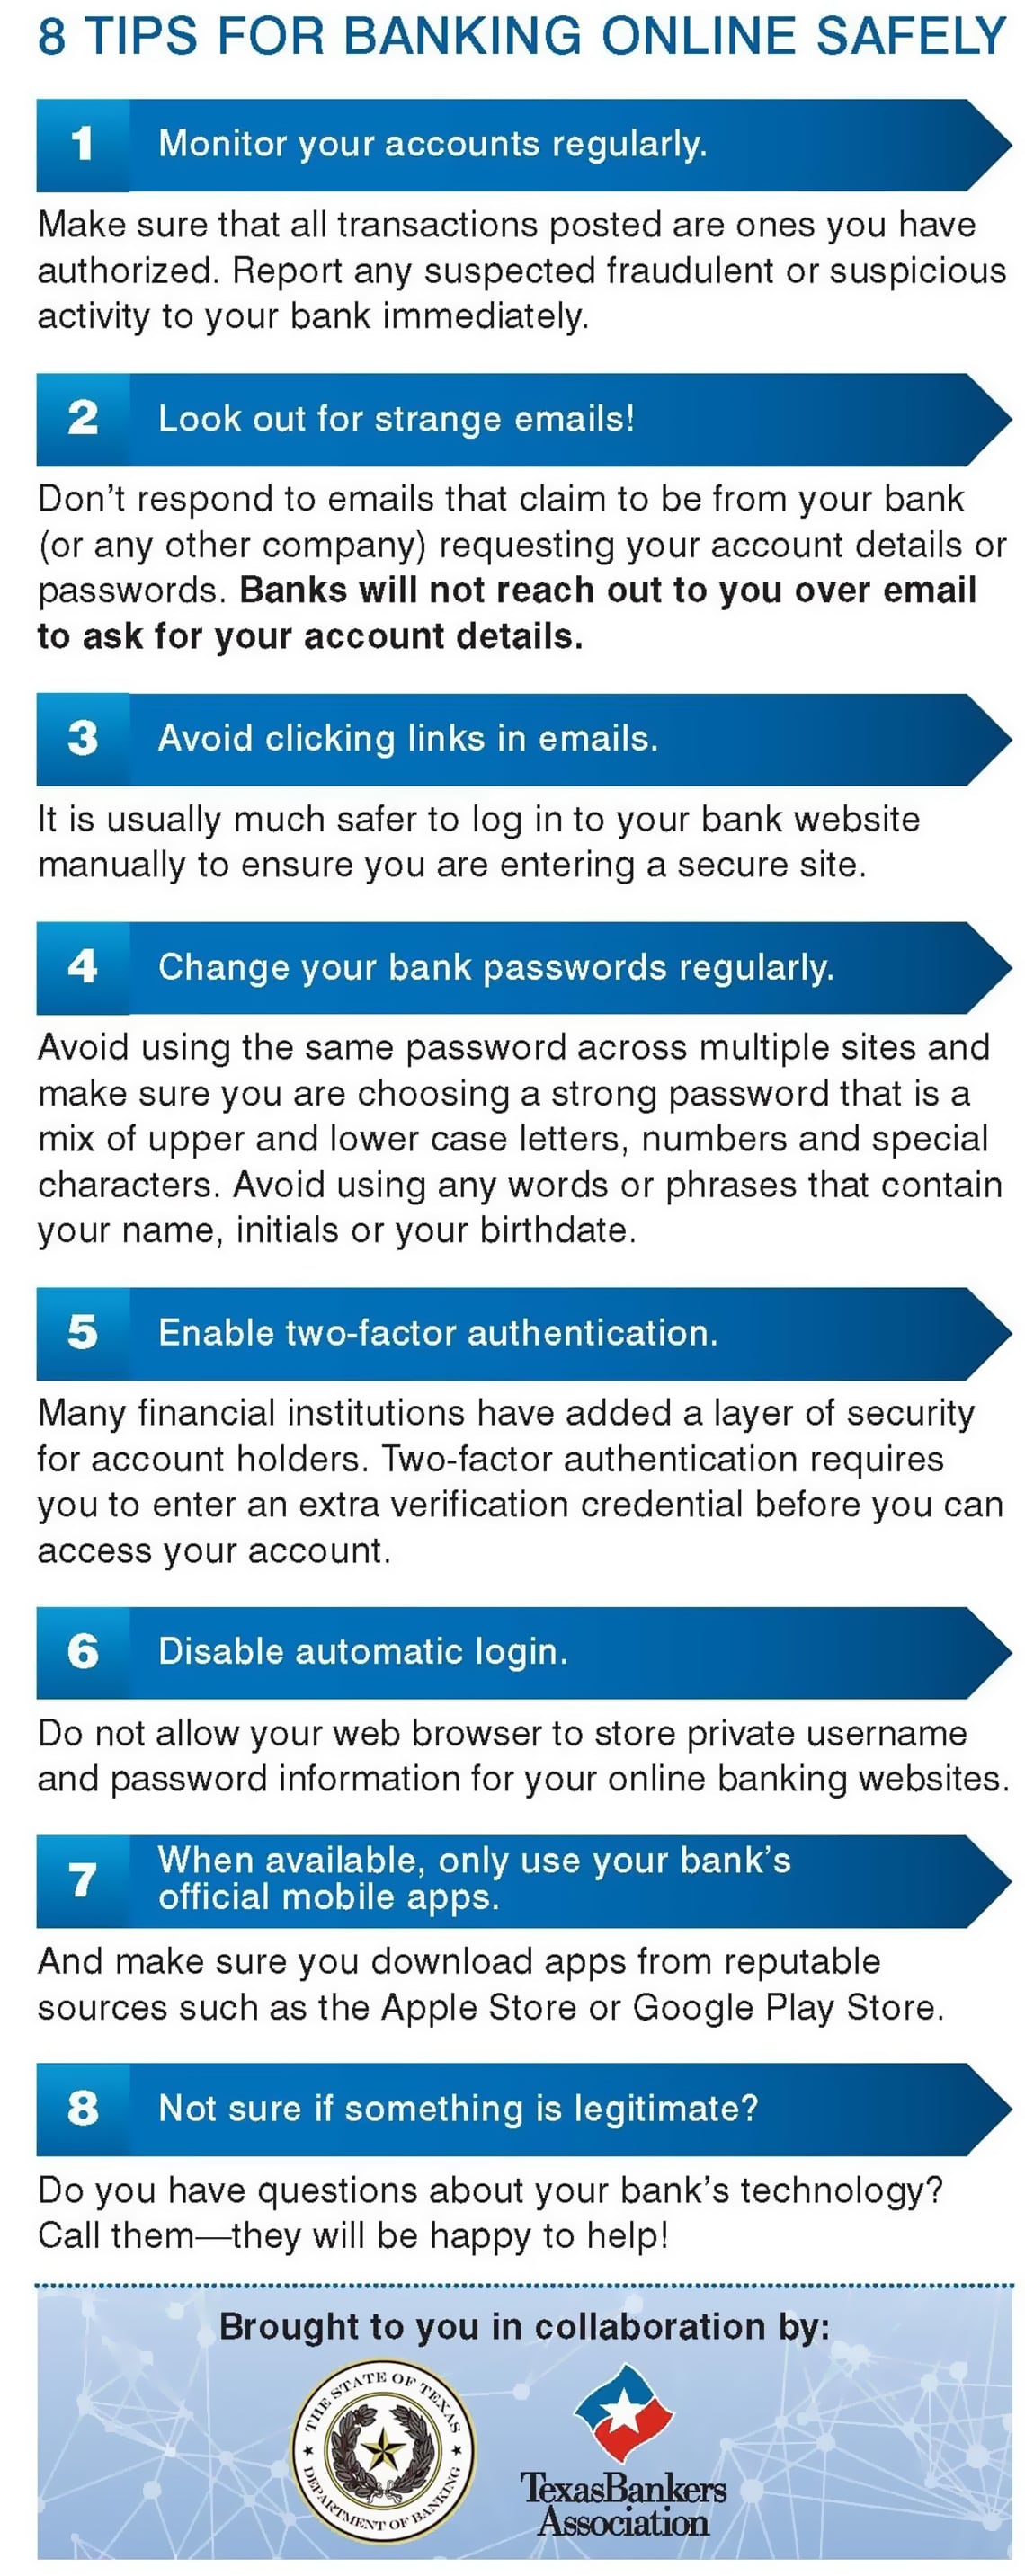 8 tips for banking online safely